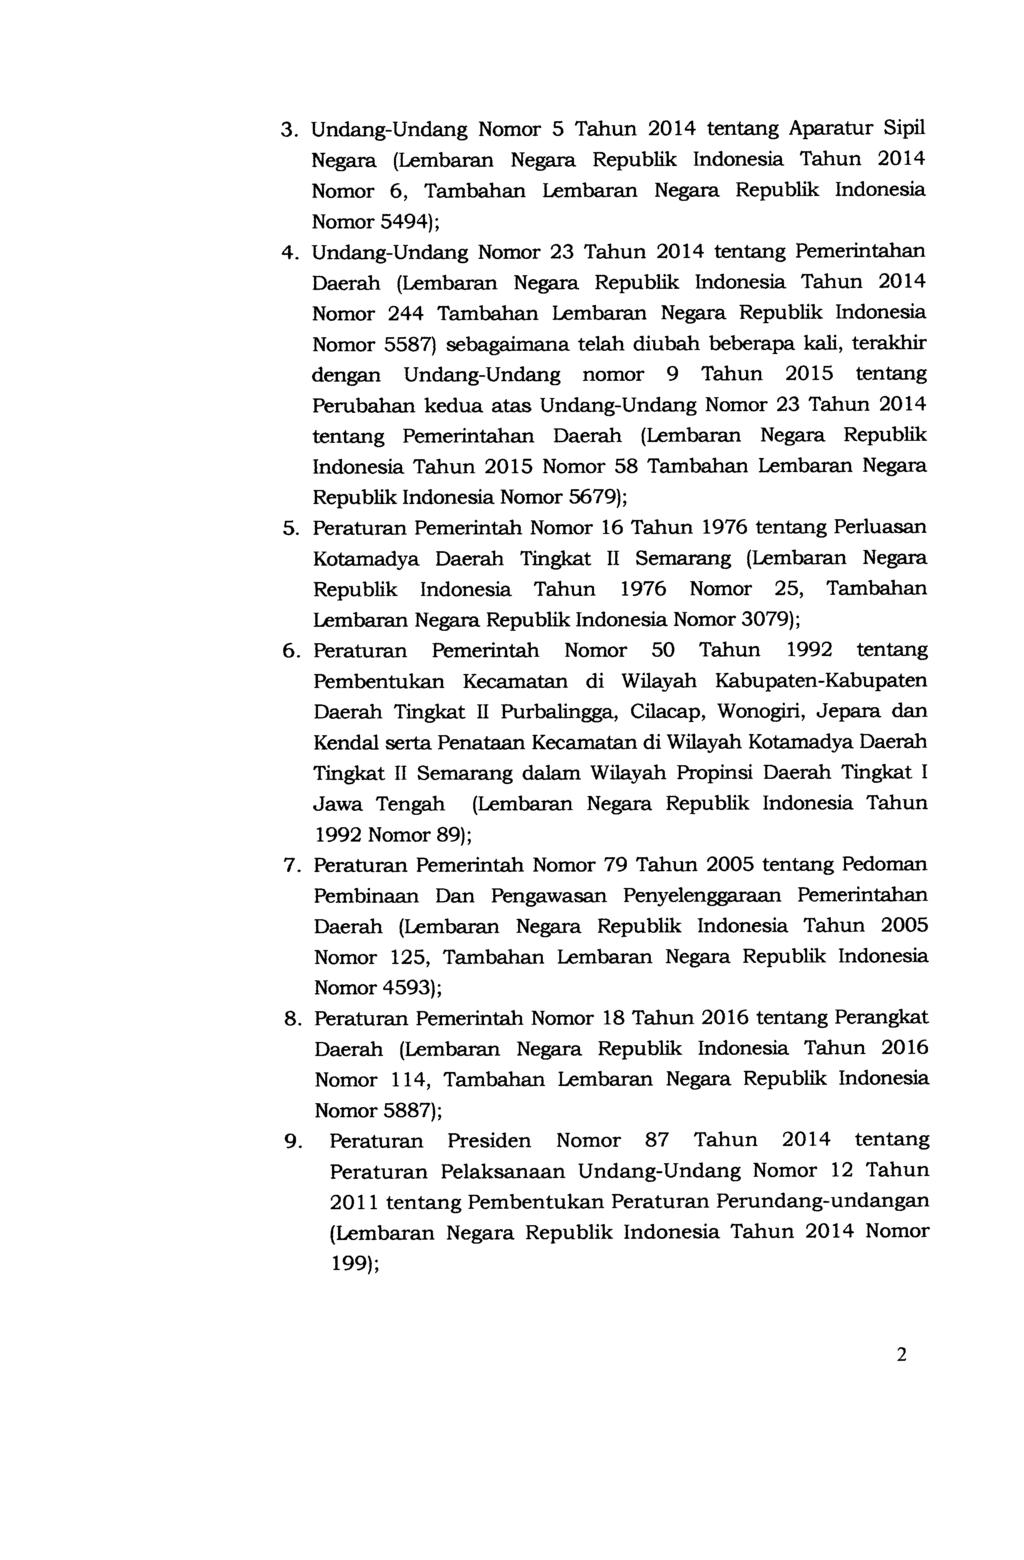 3. Undang-Undang Nomor 5 Tahun 2014 tentang Aparatur Sipil Negara (Lembaran Negara Republik Indonesia Tahun 2014 Nomor 6, Tambahan Lembaran Negara Republik Indonesia Nomor 5494); 4.